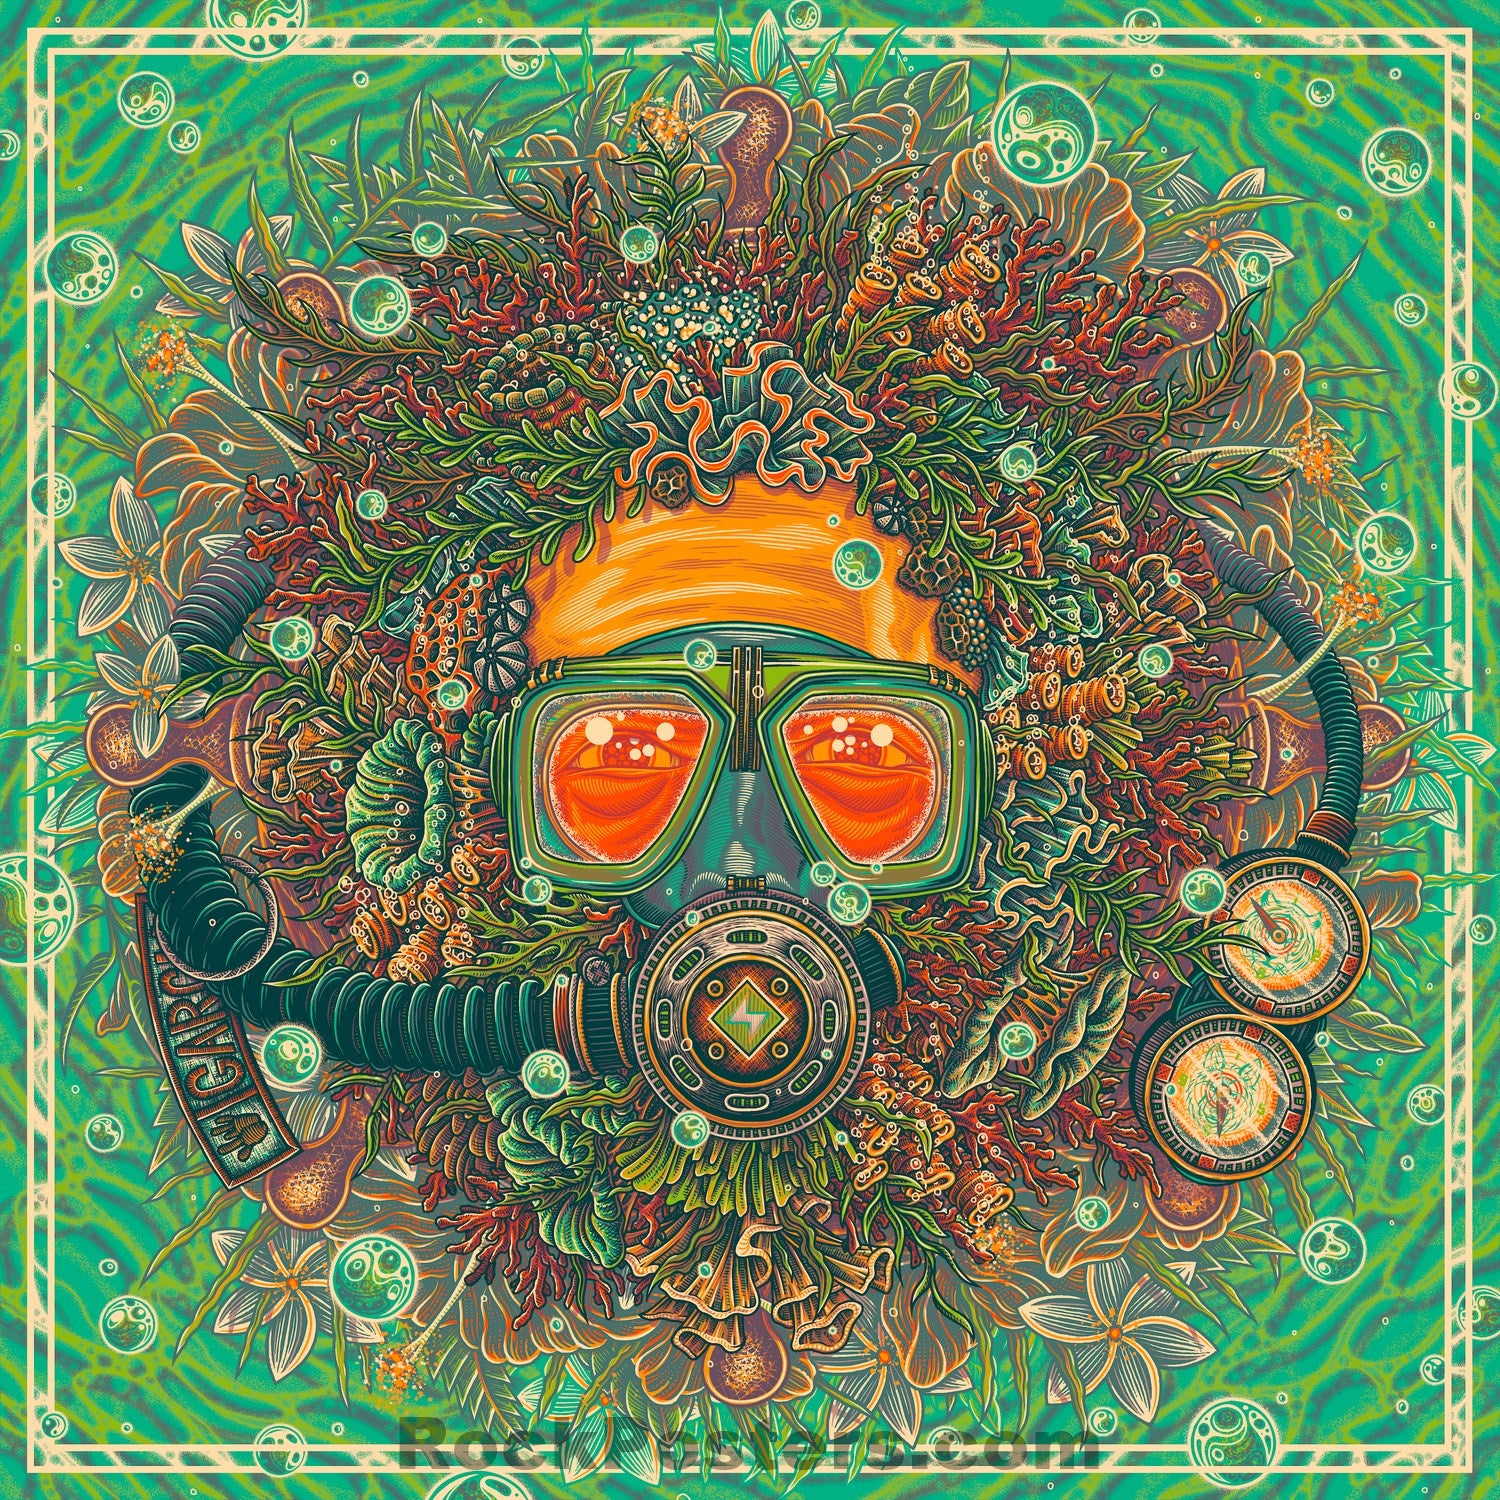 AUCTION - Jerry Garcia - Kona Ripple '24 - Bicycle Day Poster - Luke Martin - Mint